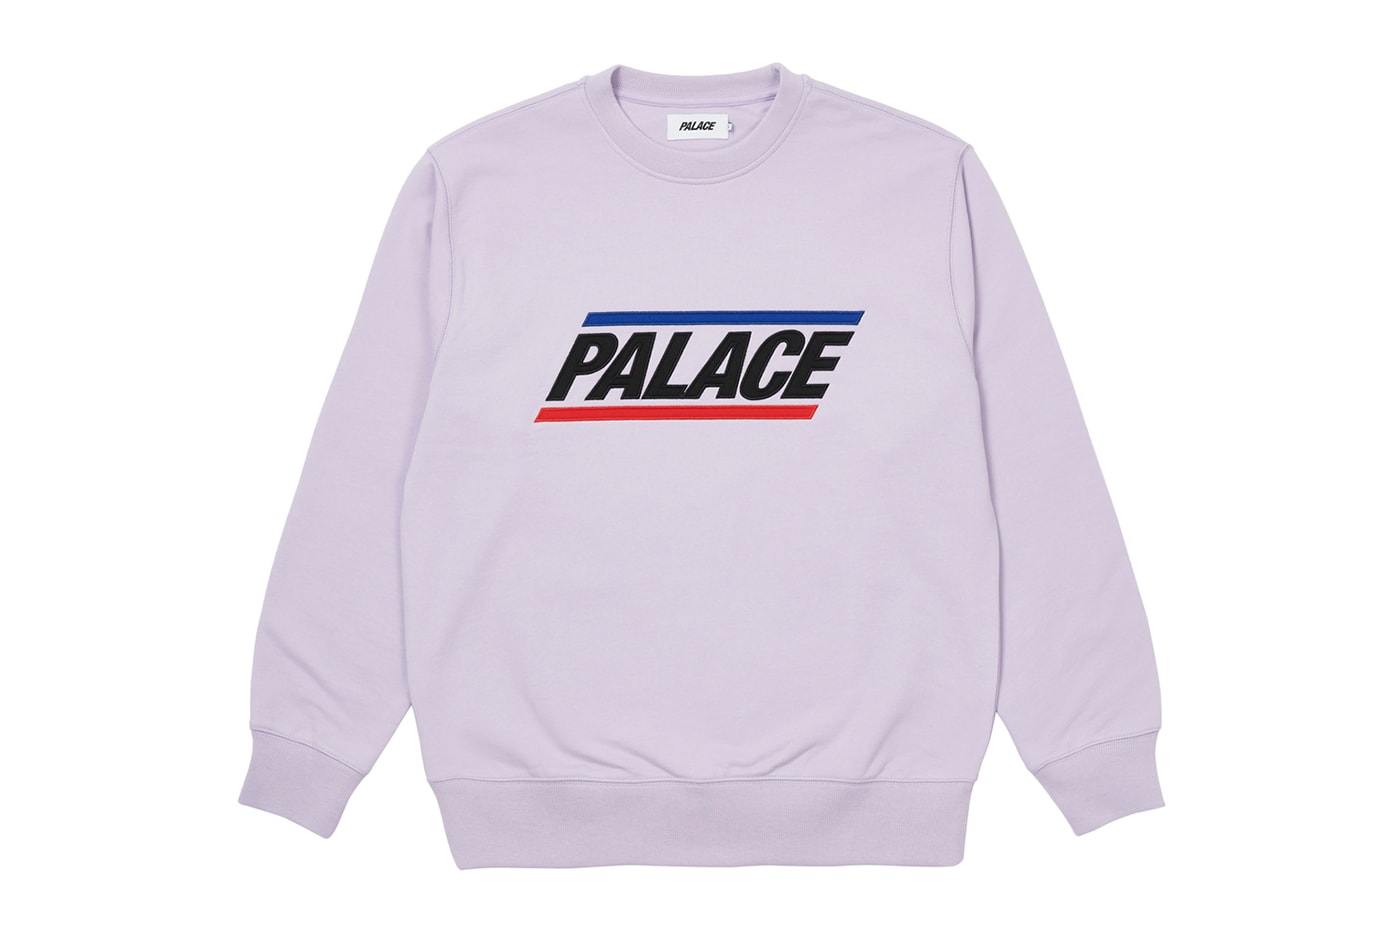 Palace Summer 2021 Outerwear Jackets Sweatshirts Hoodies